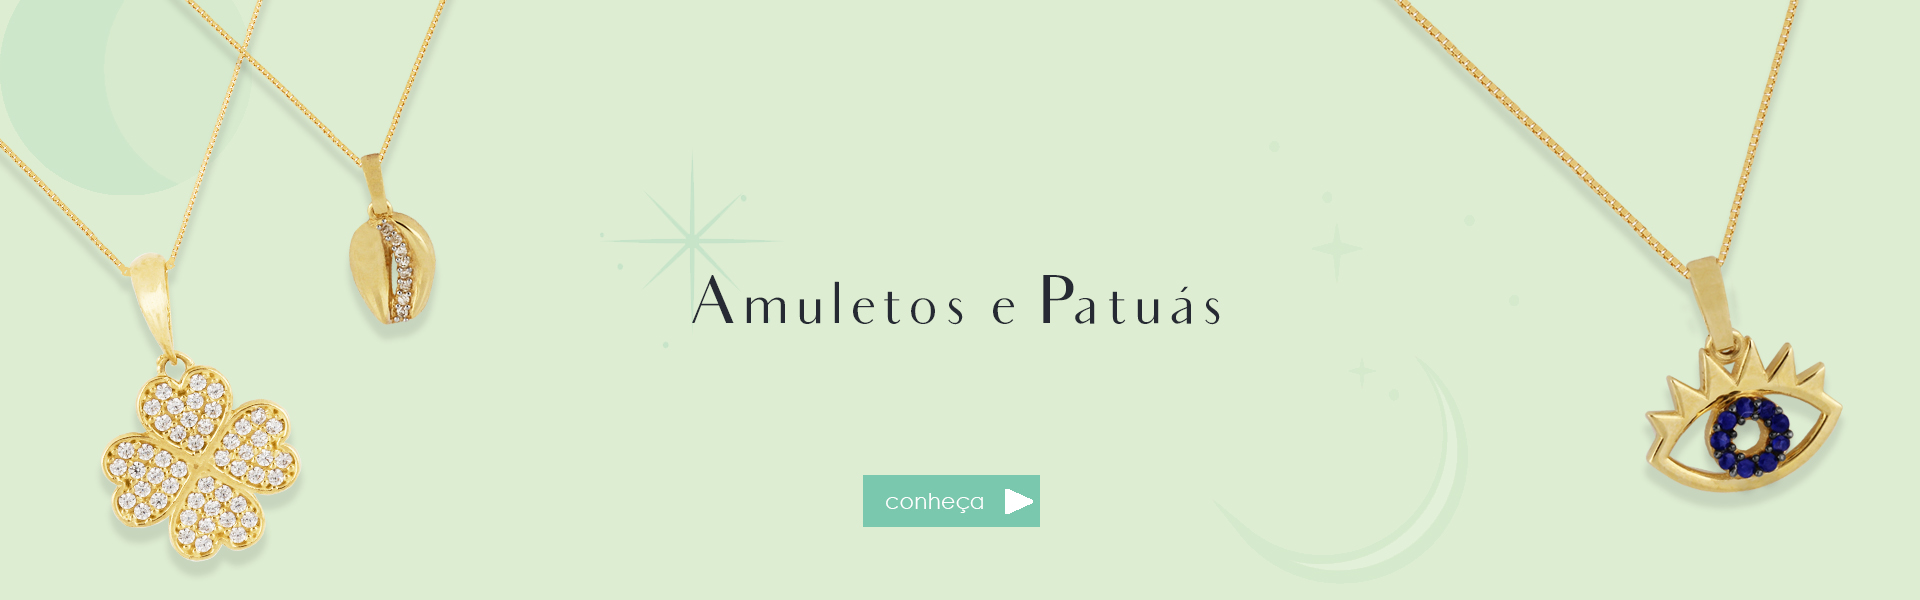 Amuletos e Patuás